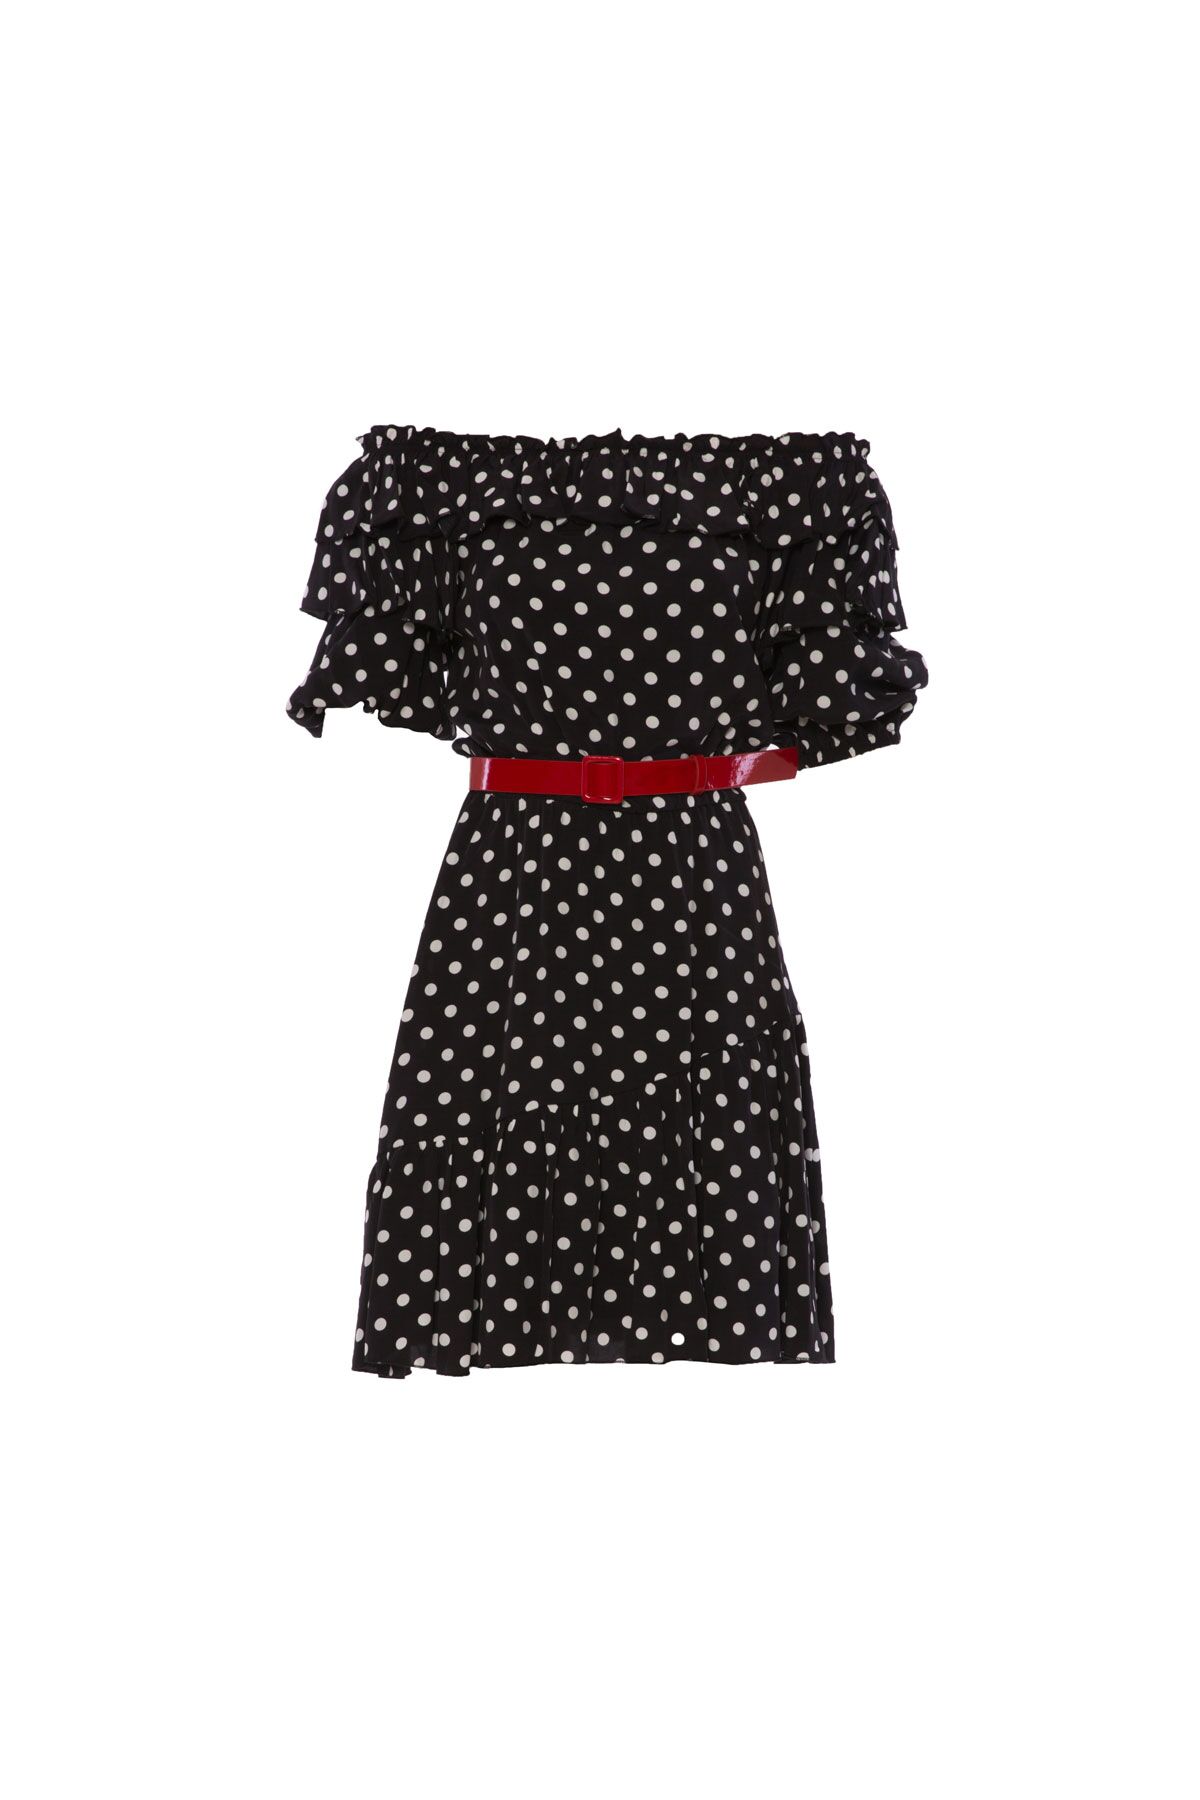 KIWE - Frill Detailed Shoulder Elastic Belt Polka Dot Black Midi Dress